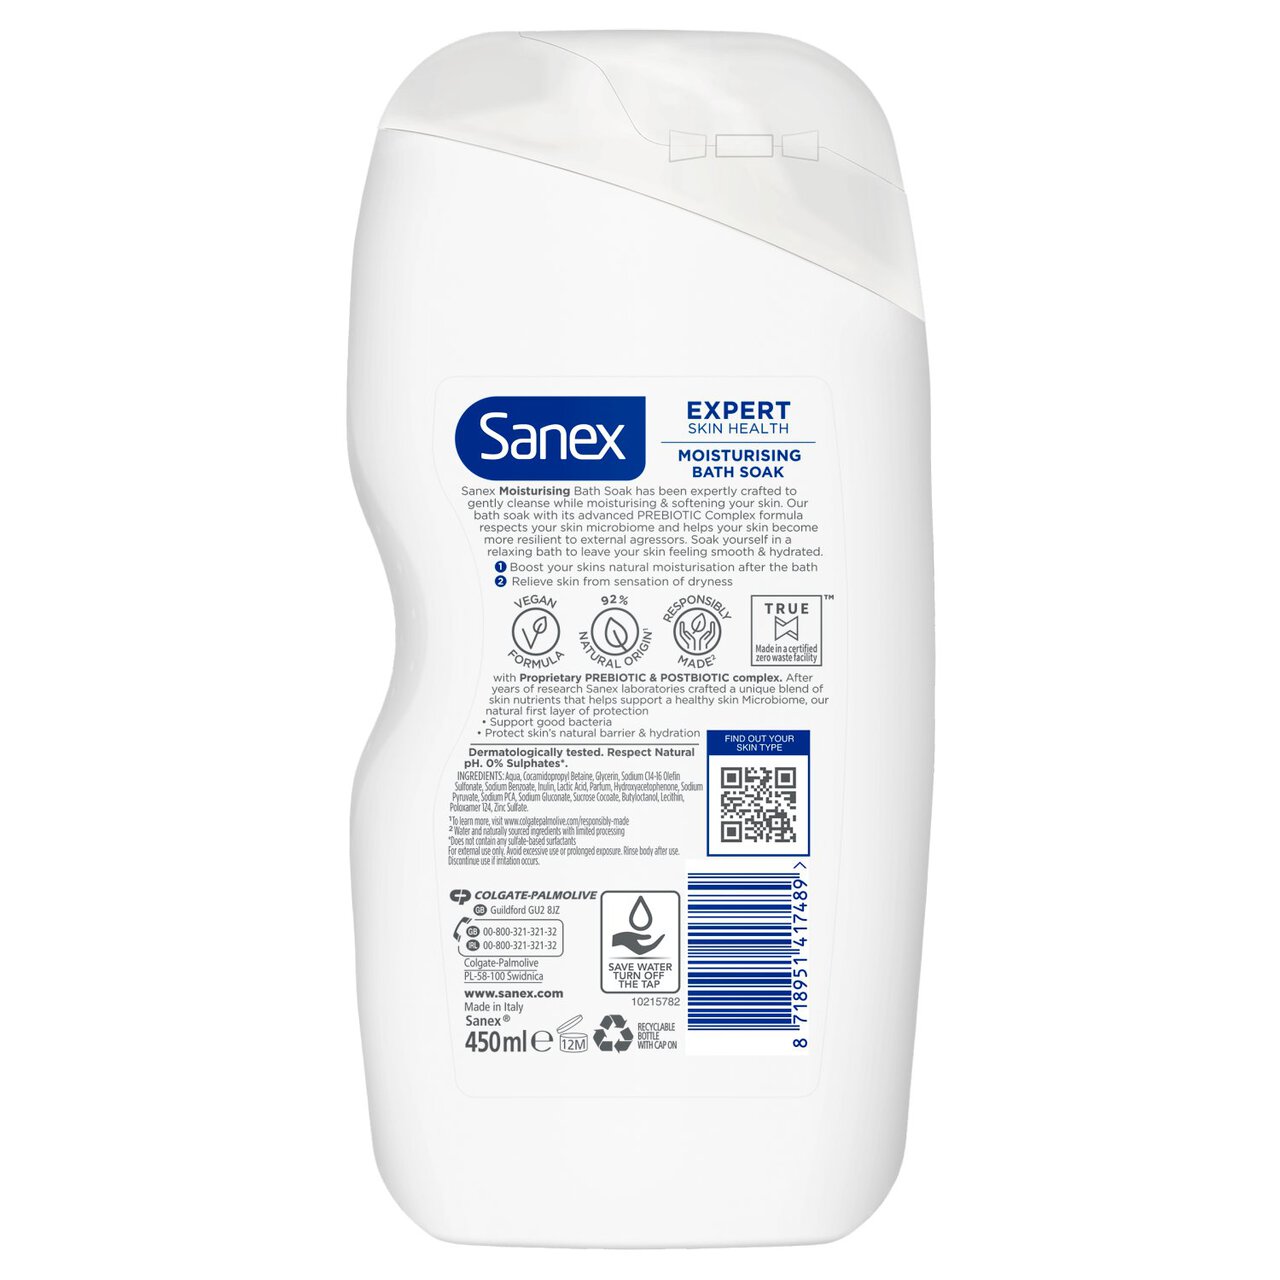 Sanex Expert Moisturising Bath Soak 450ml